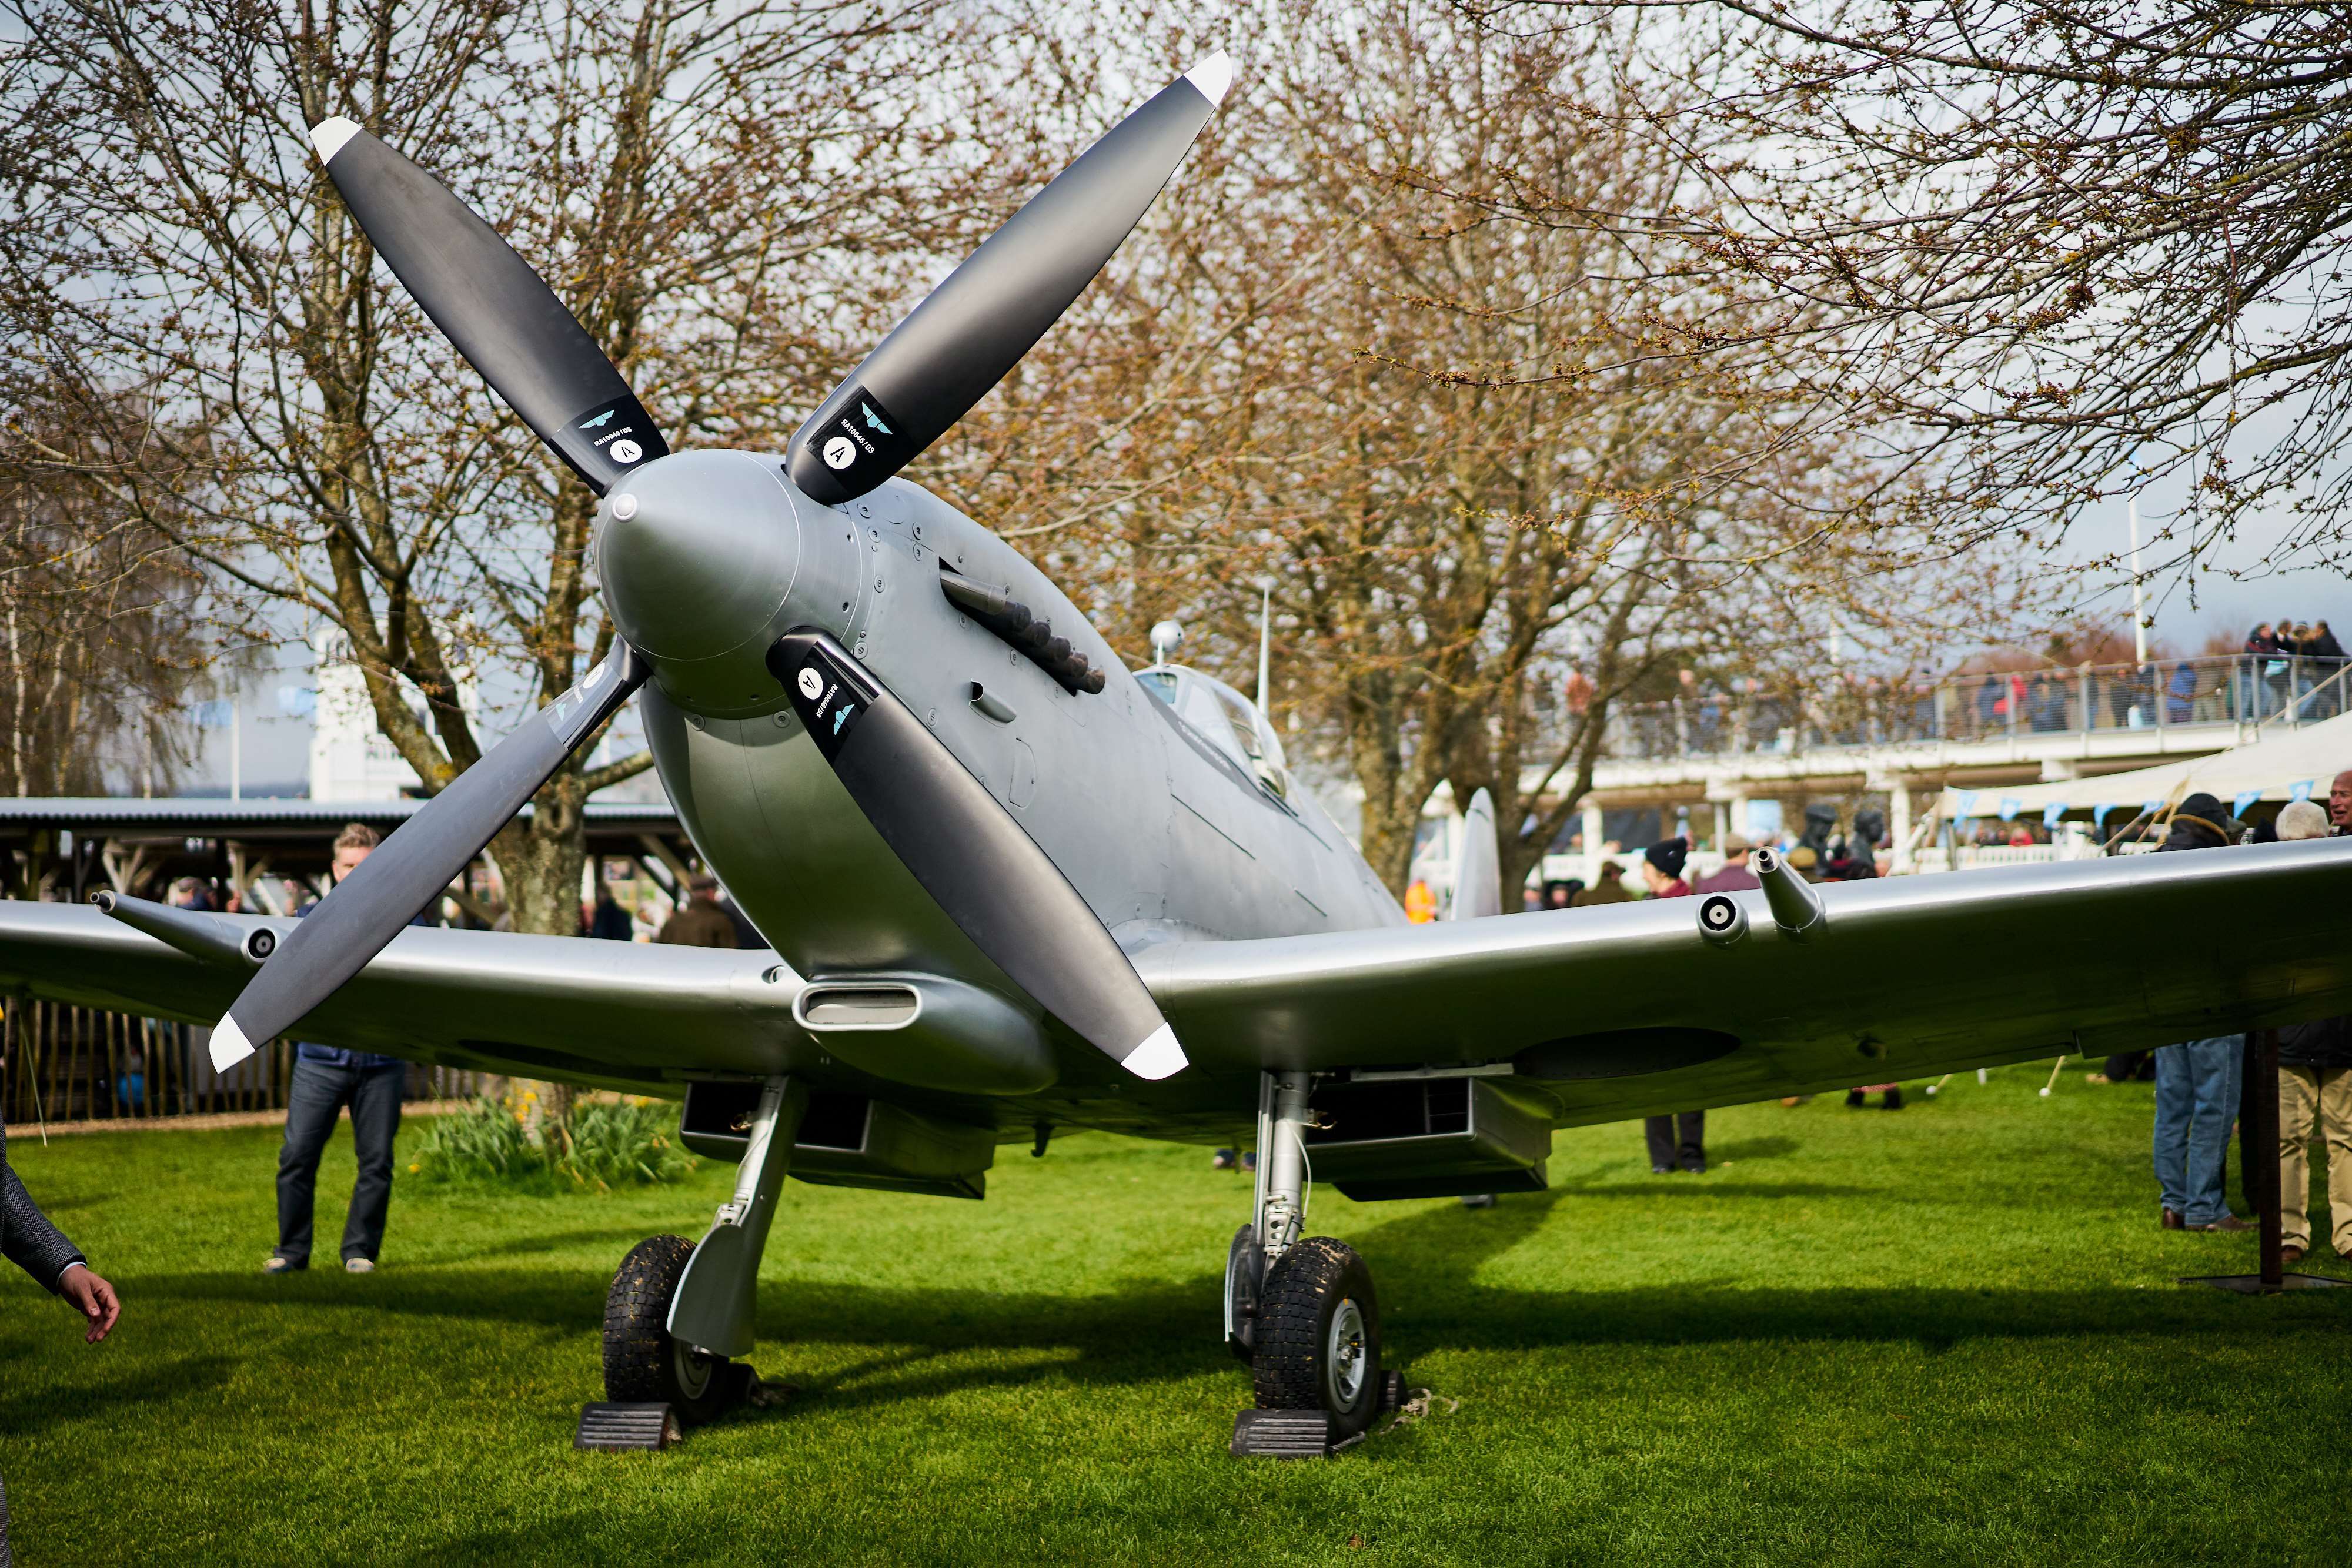 77mm-silver-spitfire-the-longest-flight-james-lynch-goodwood-11042019.jpg